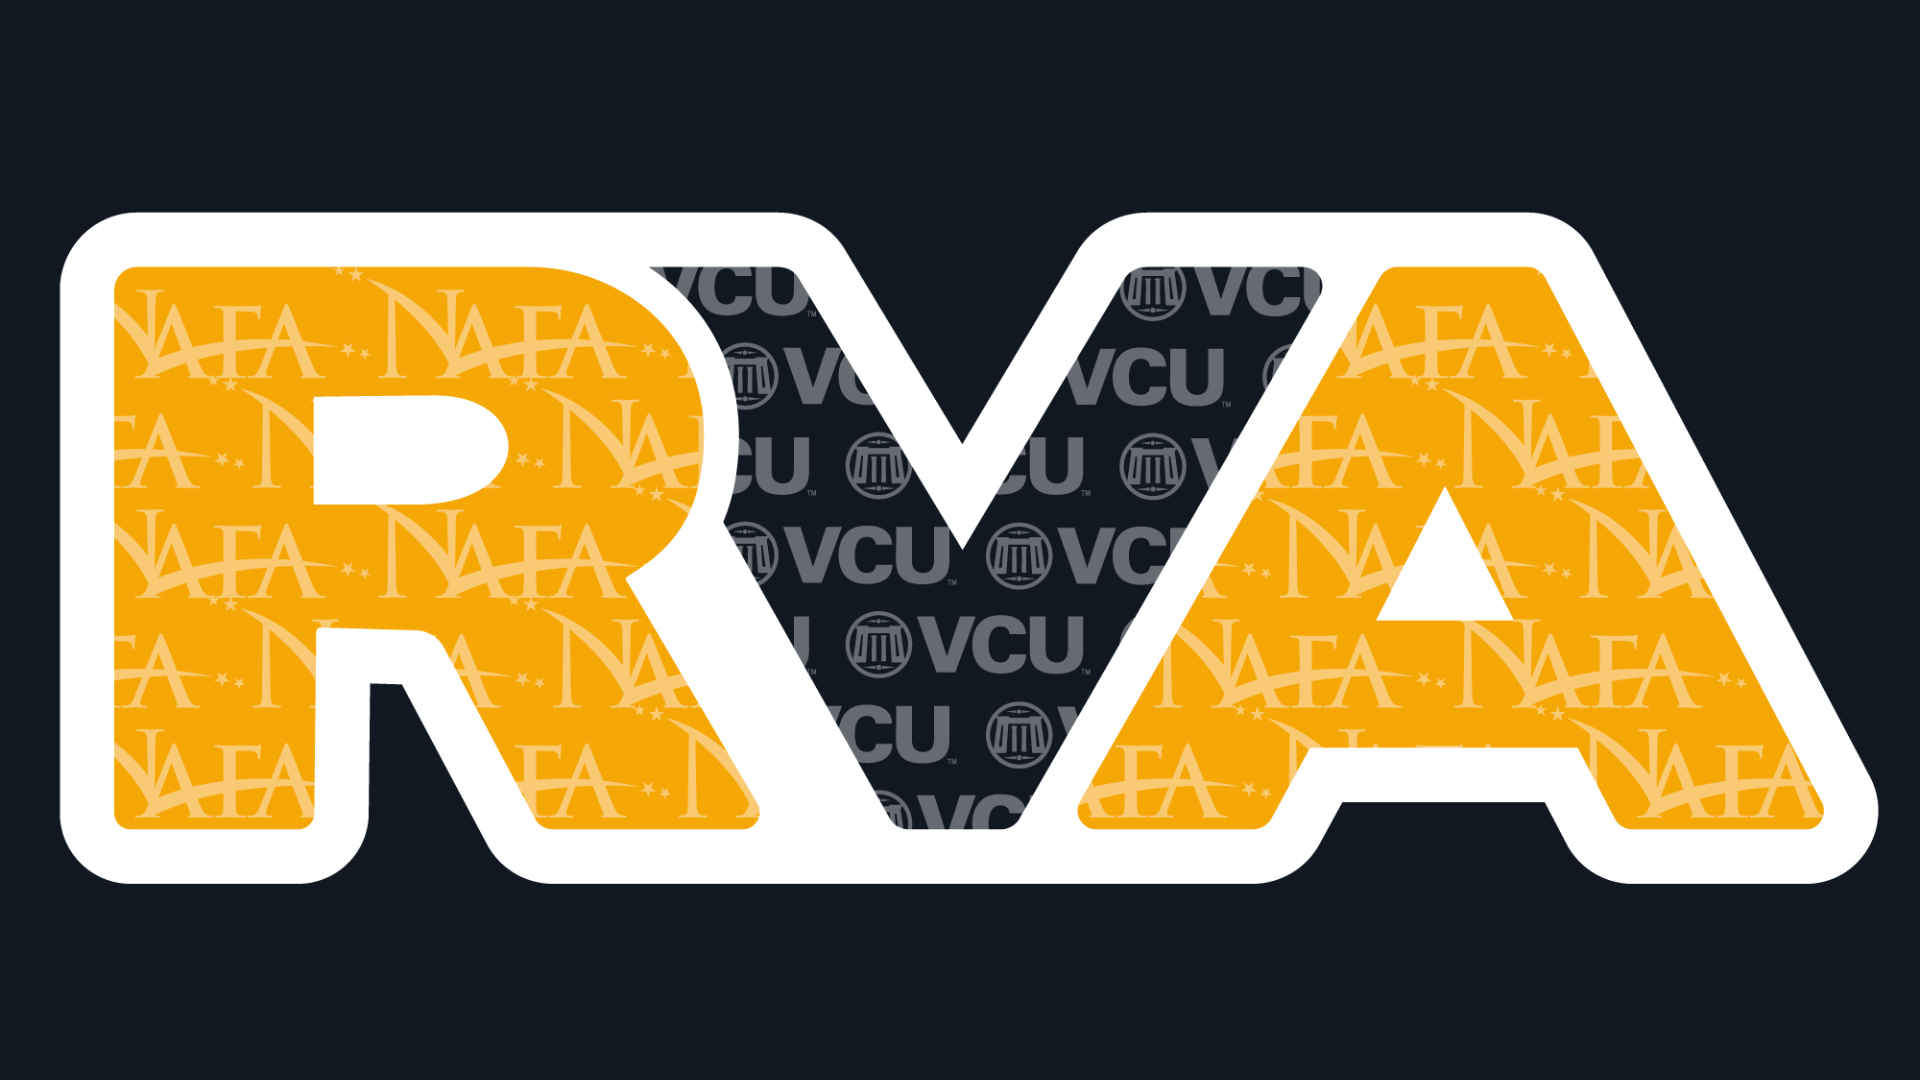 RVA in block letters with NAFA logo pattern